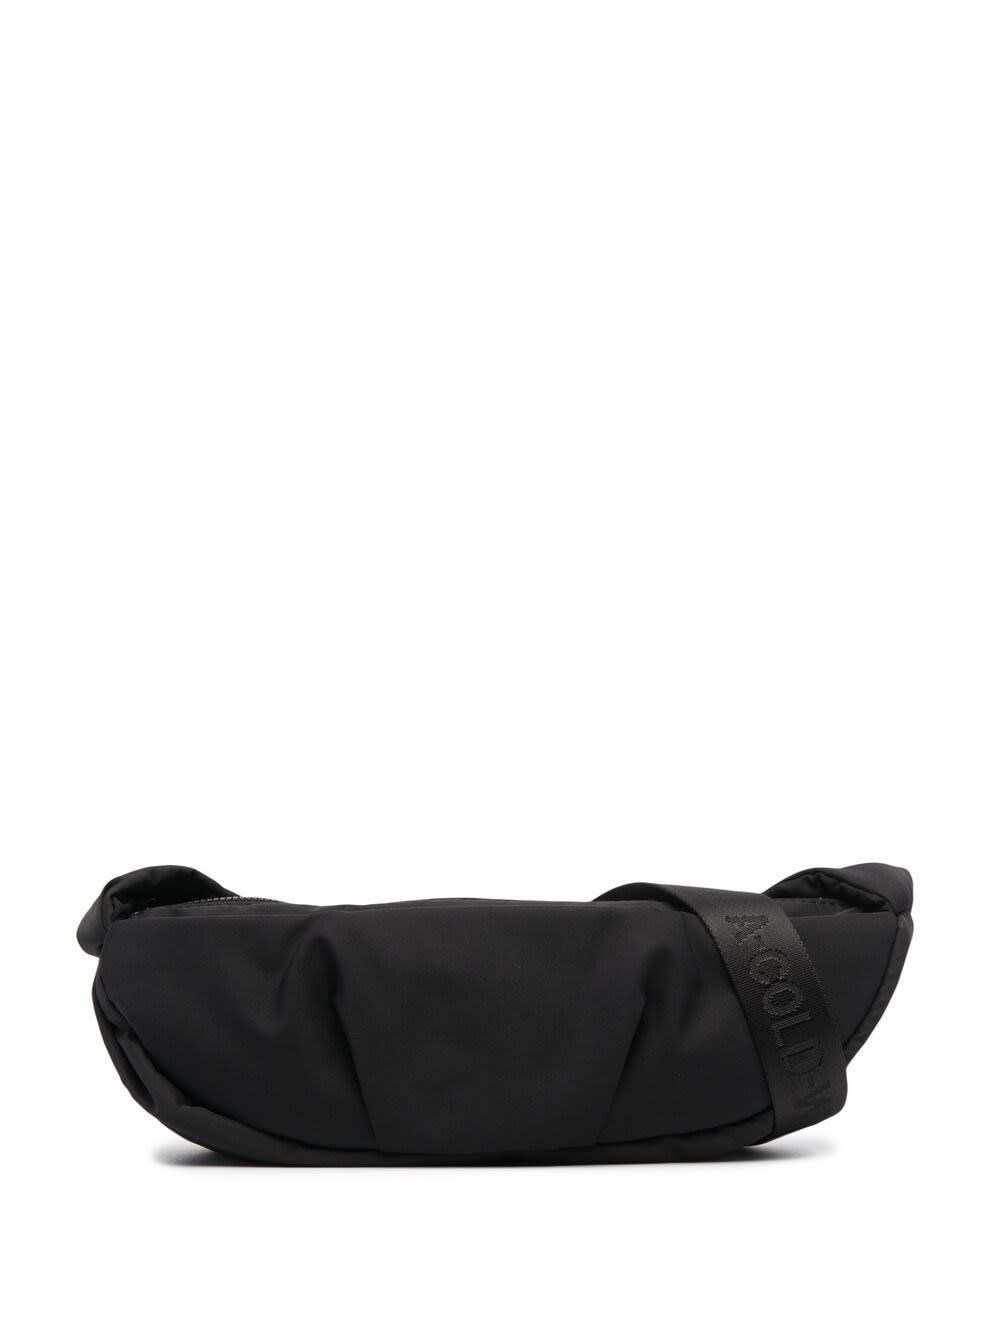 A-COLD-WALL Rhombus Belt Bag In Black Nylon